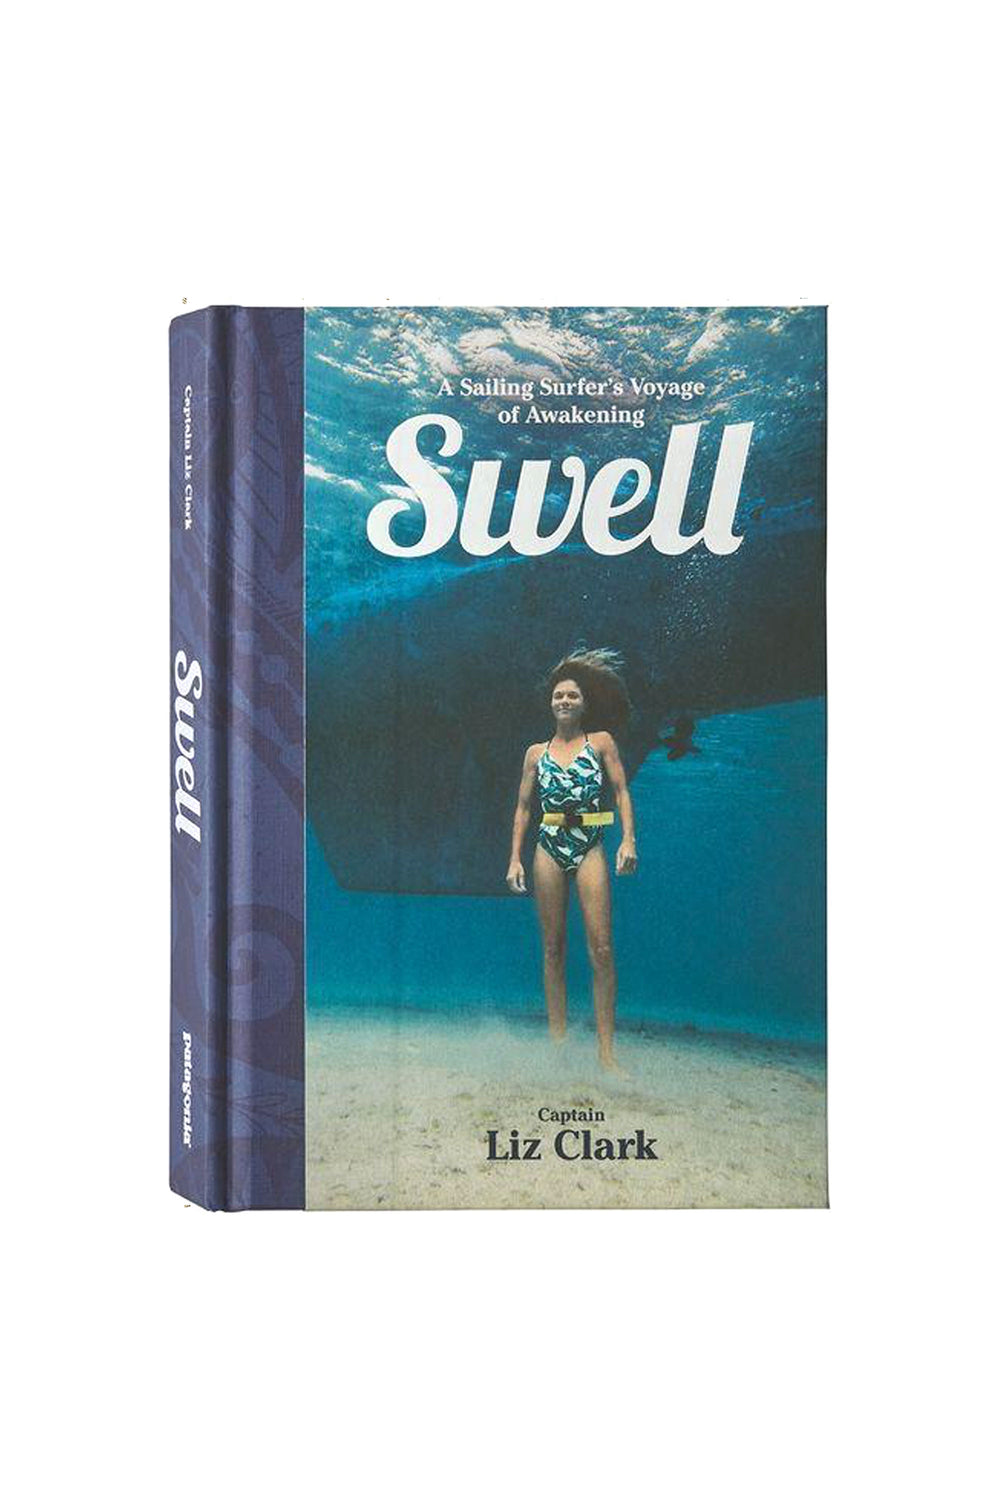 Pukas-surf-shop-book-swell-sailing-1